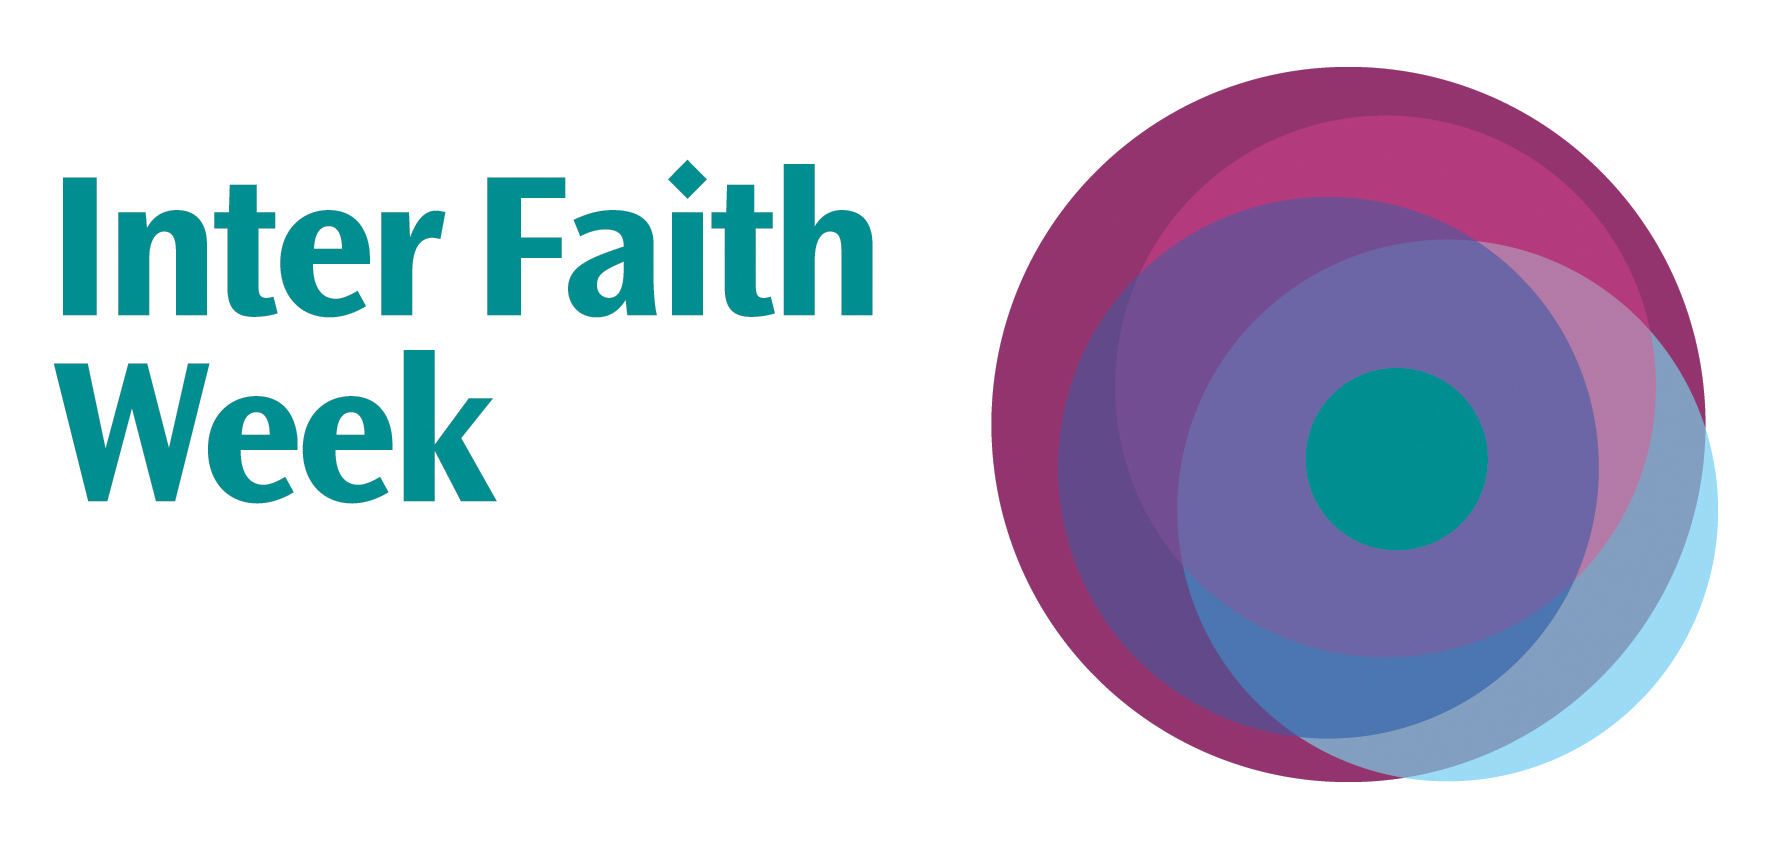 Inter Faith Week logo and branding